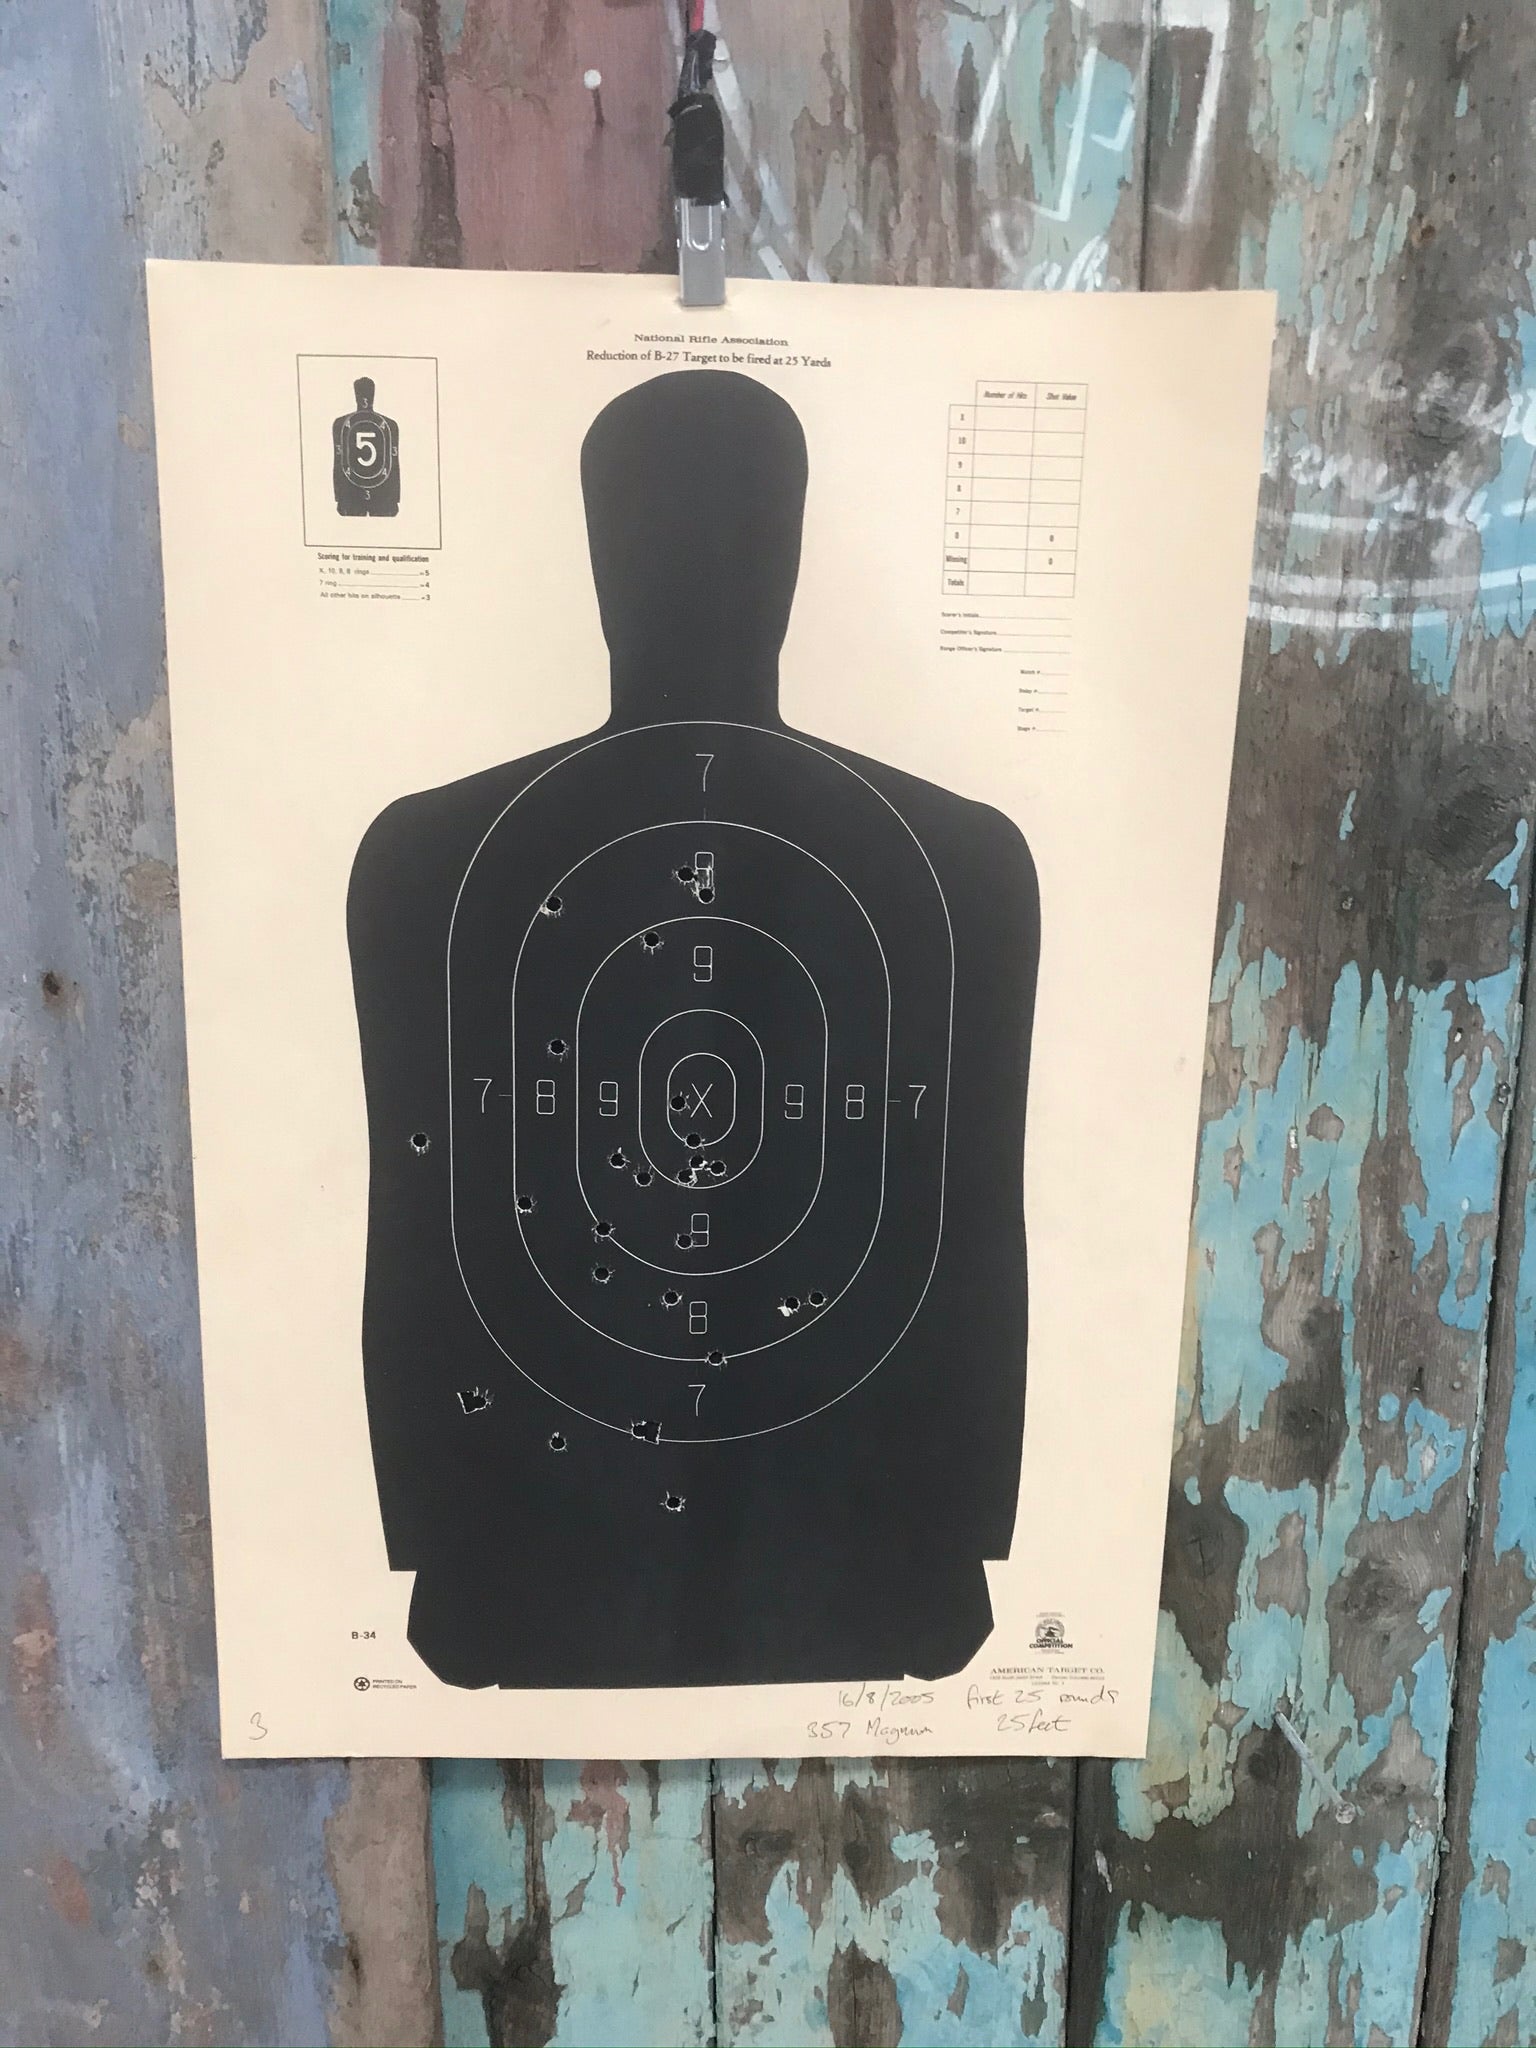 Vintage shooting firing range targets NRA B27